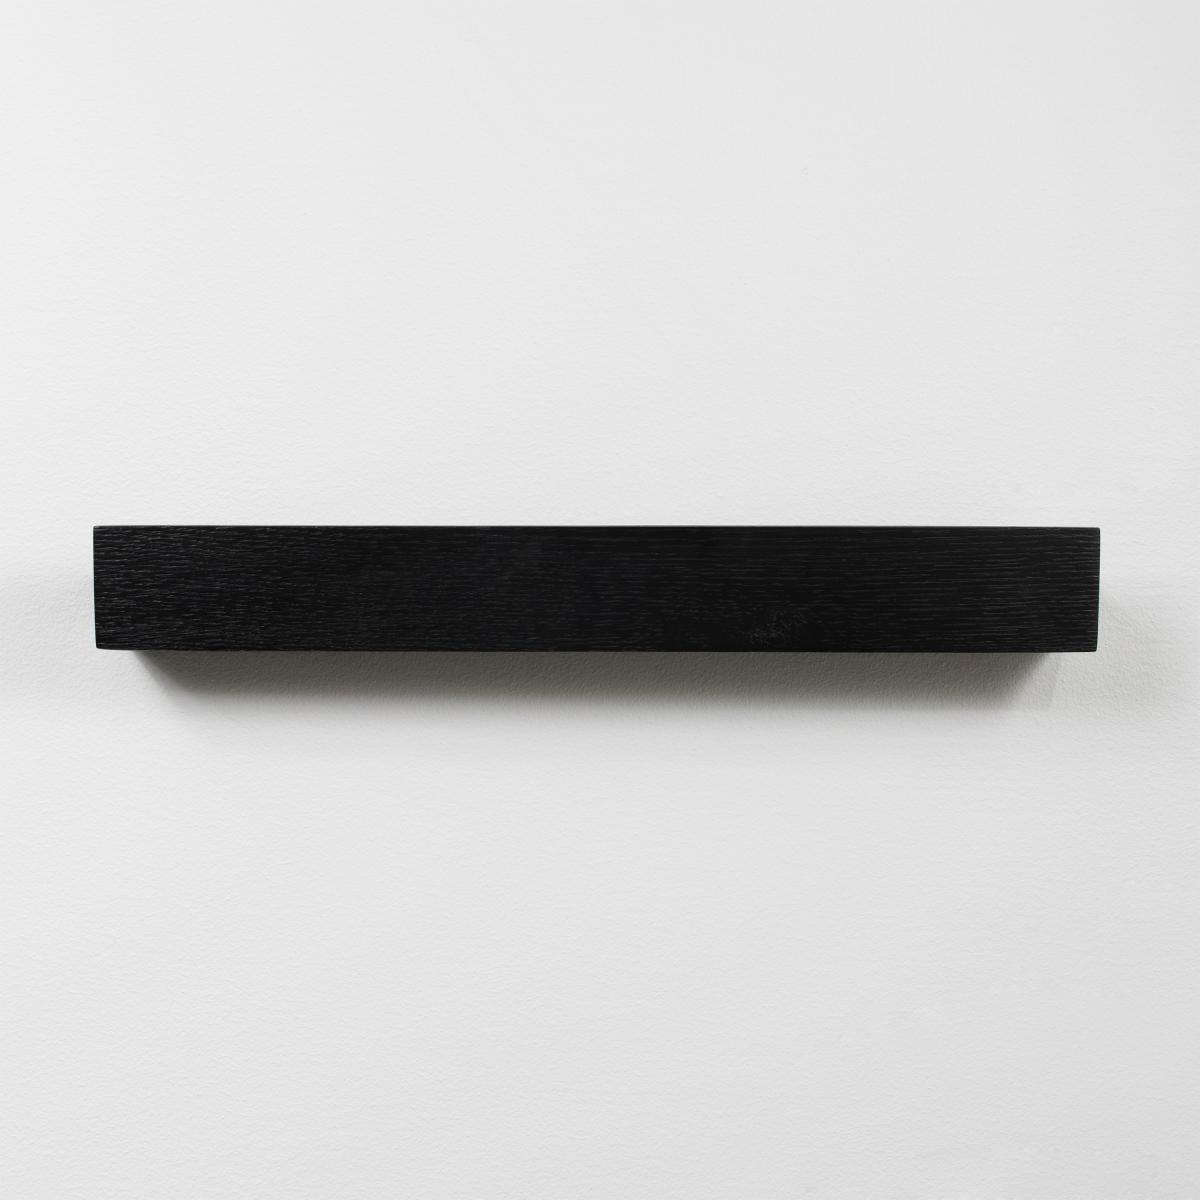 Buy Magnet Shelf Black Painted Oak 60 cm here -